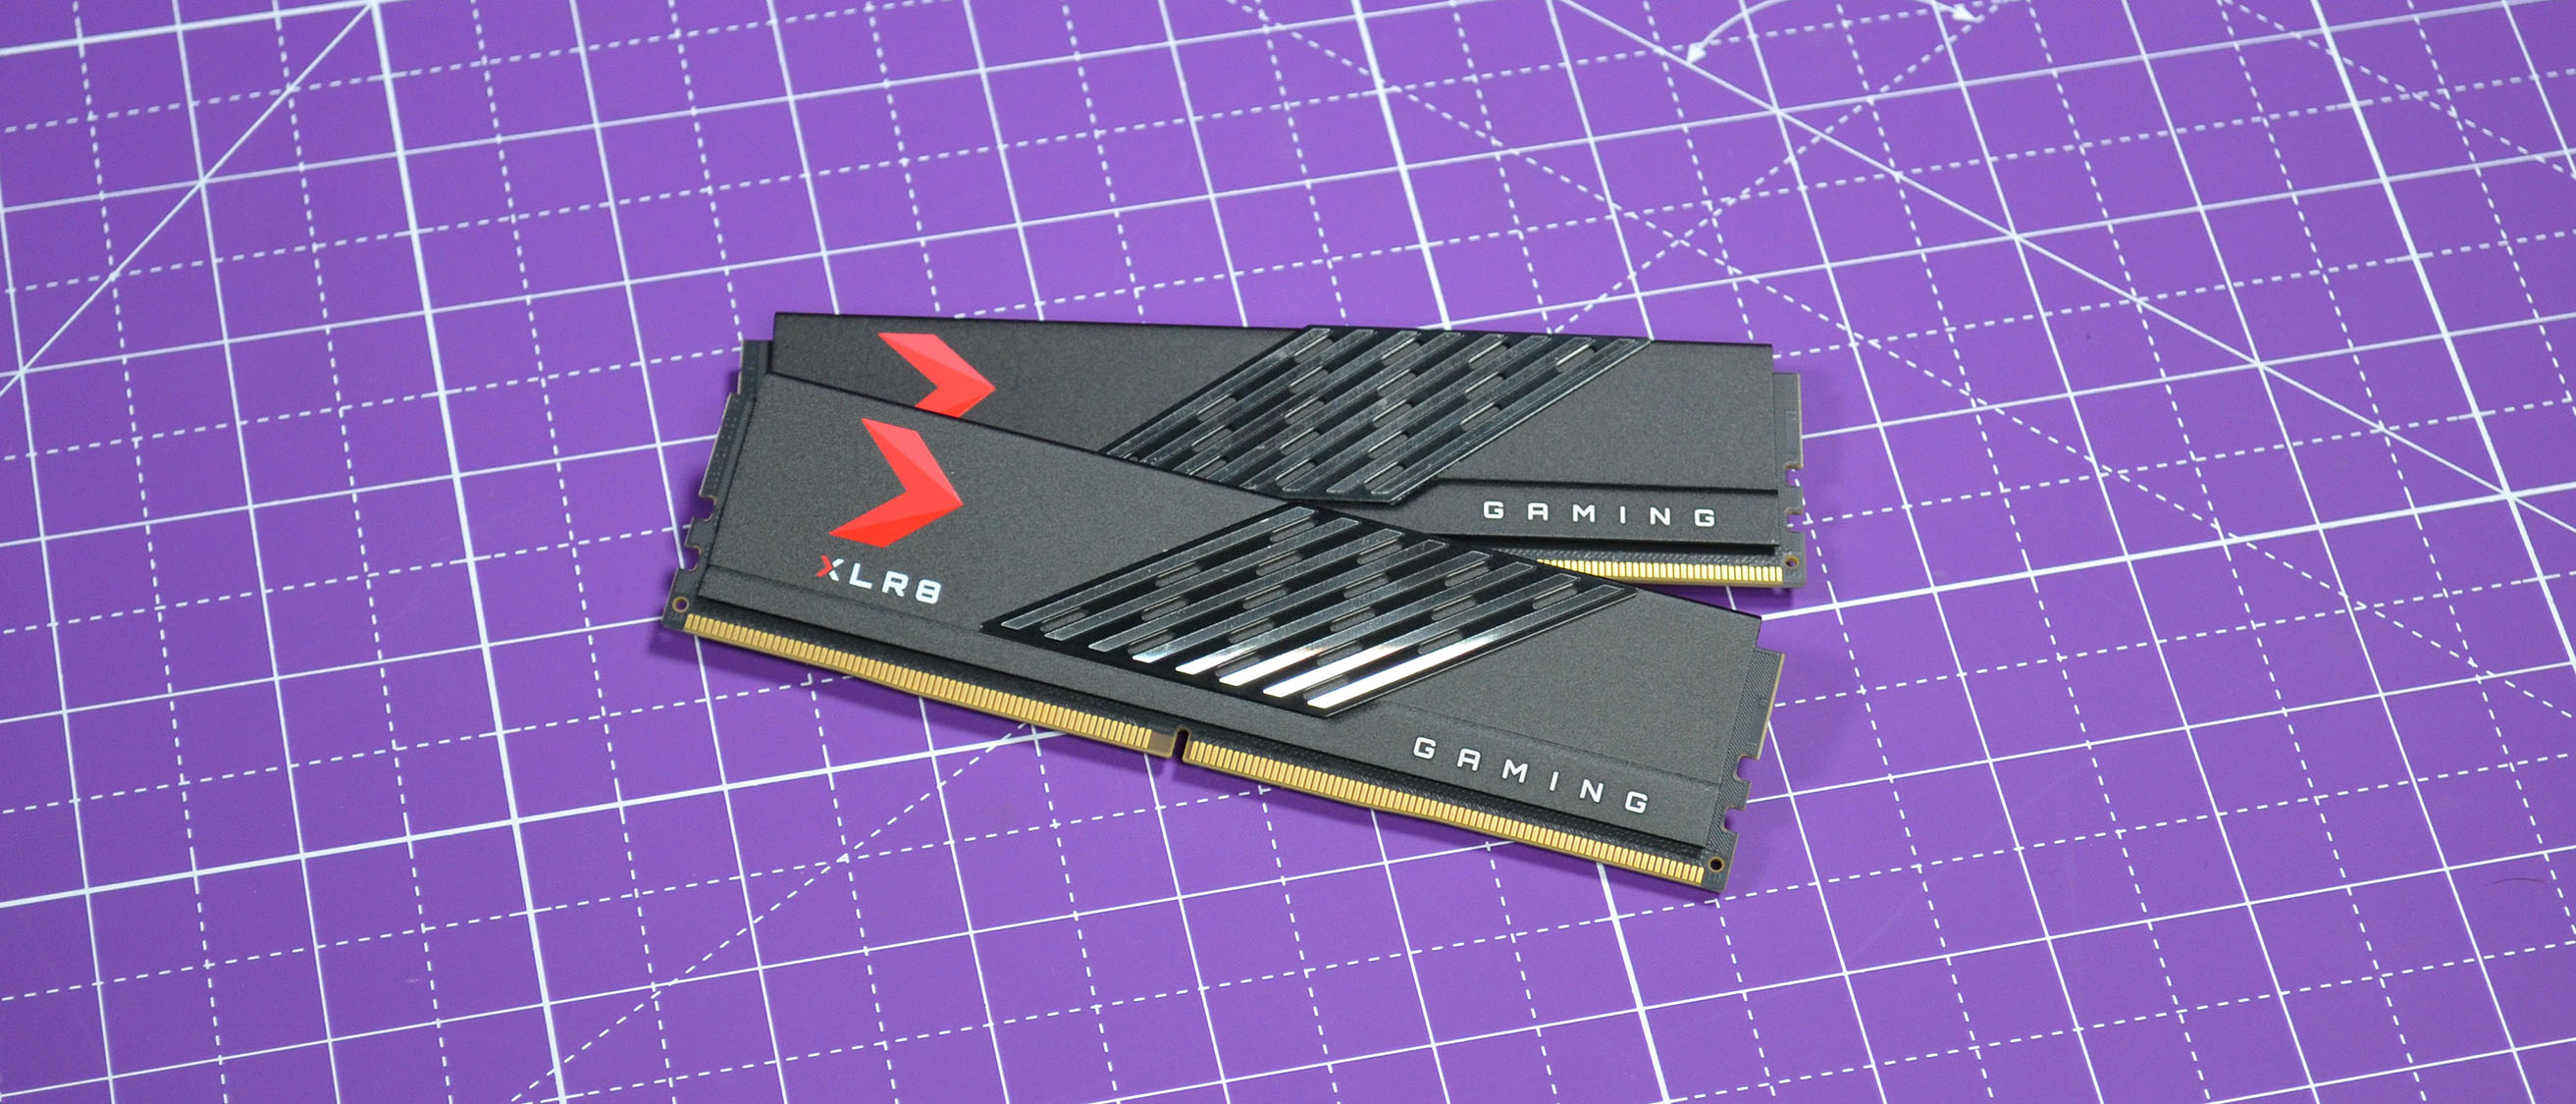 PNY XLR8 DDR4-3200 32GB Dual-Channel Memory Kit Review